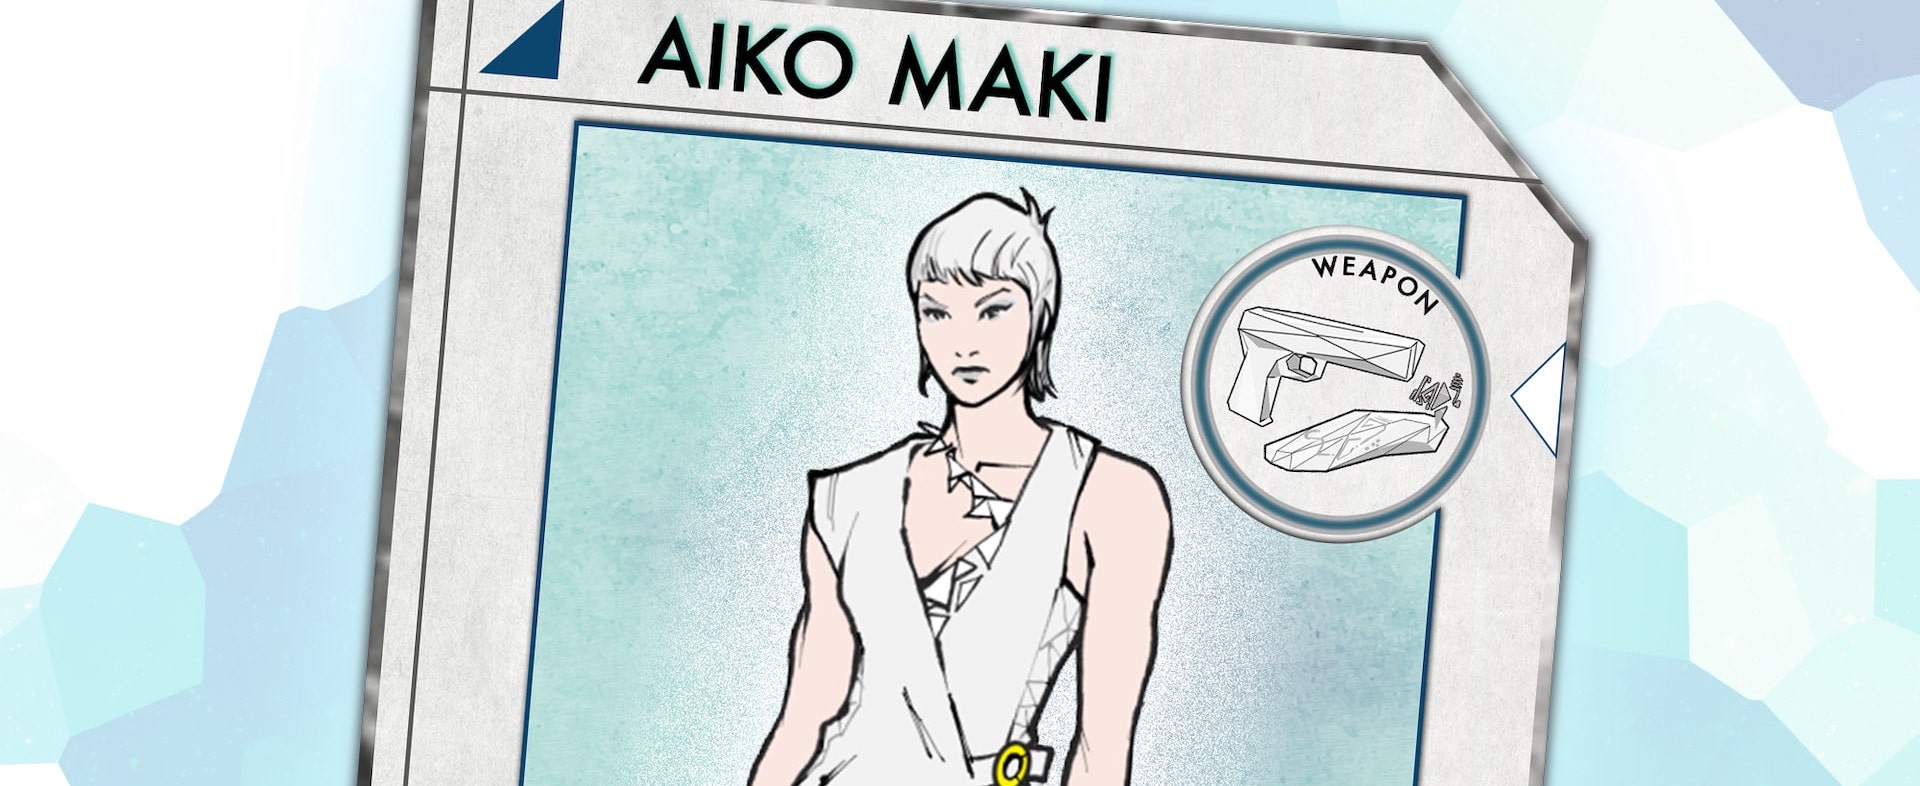 Meet new character Aiko Maki in 'G.O.D.S.' teaser